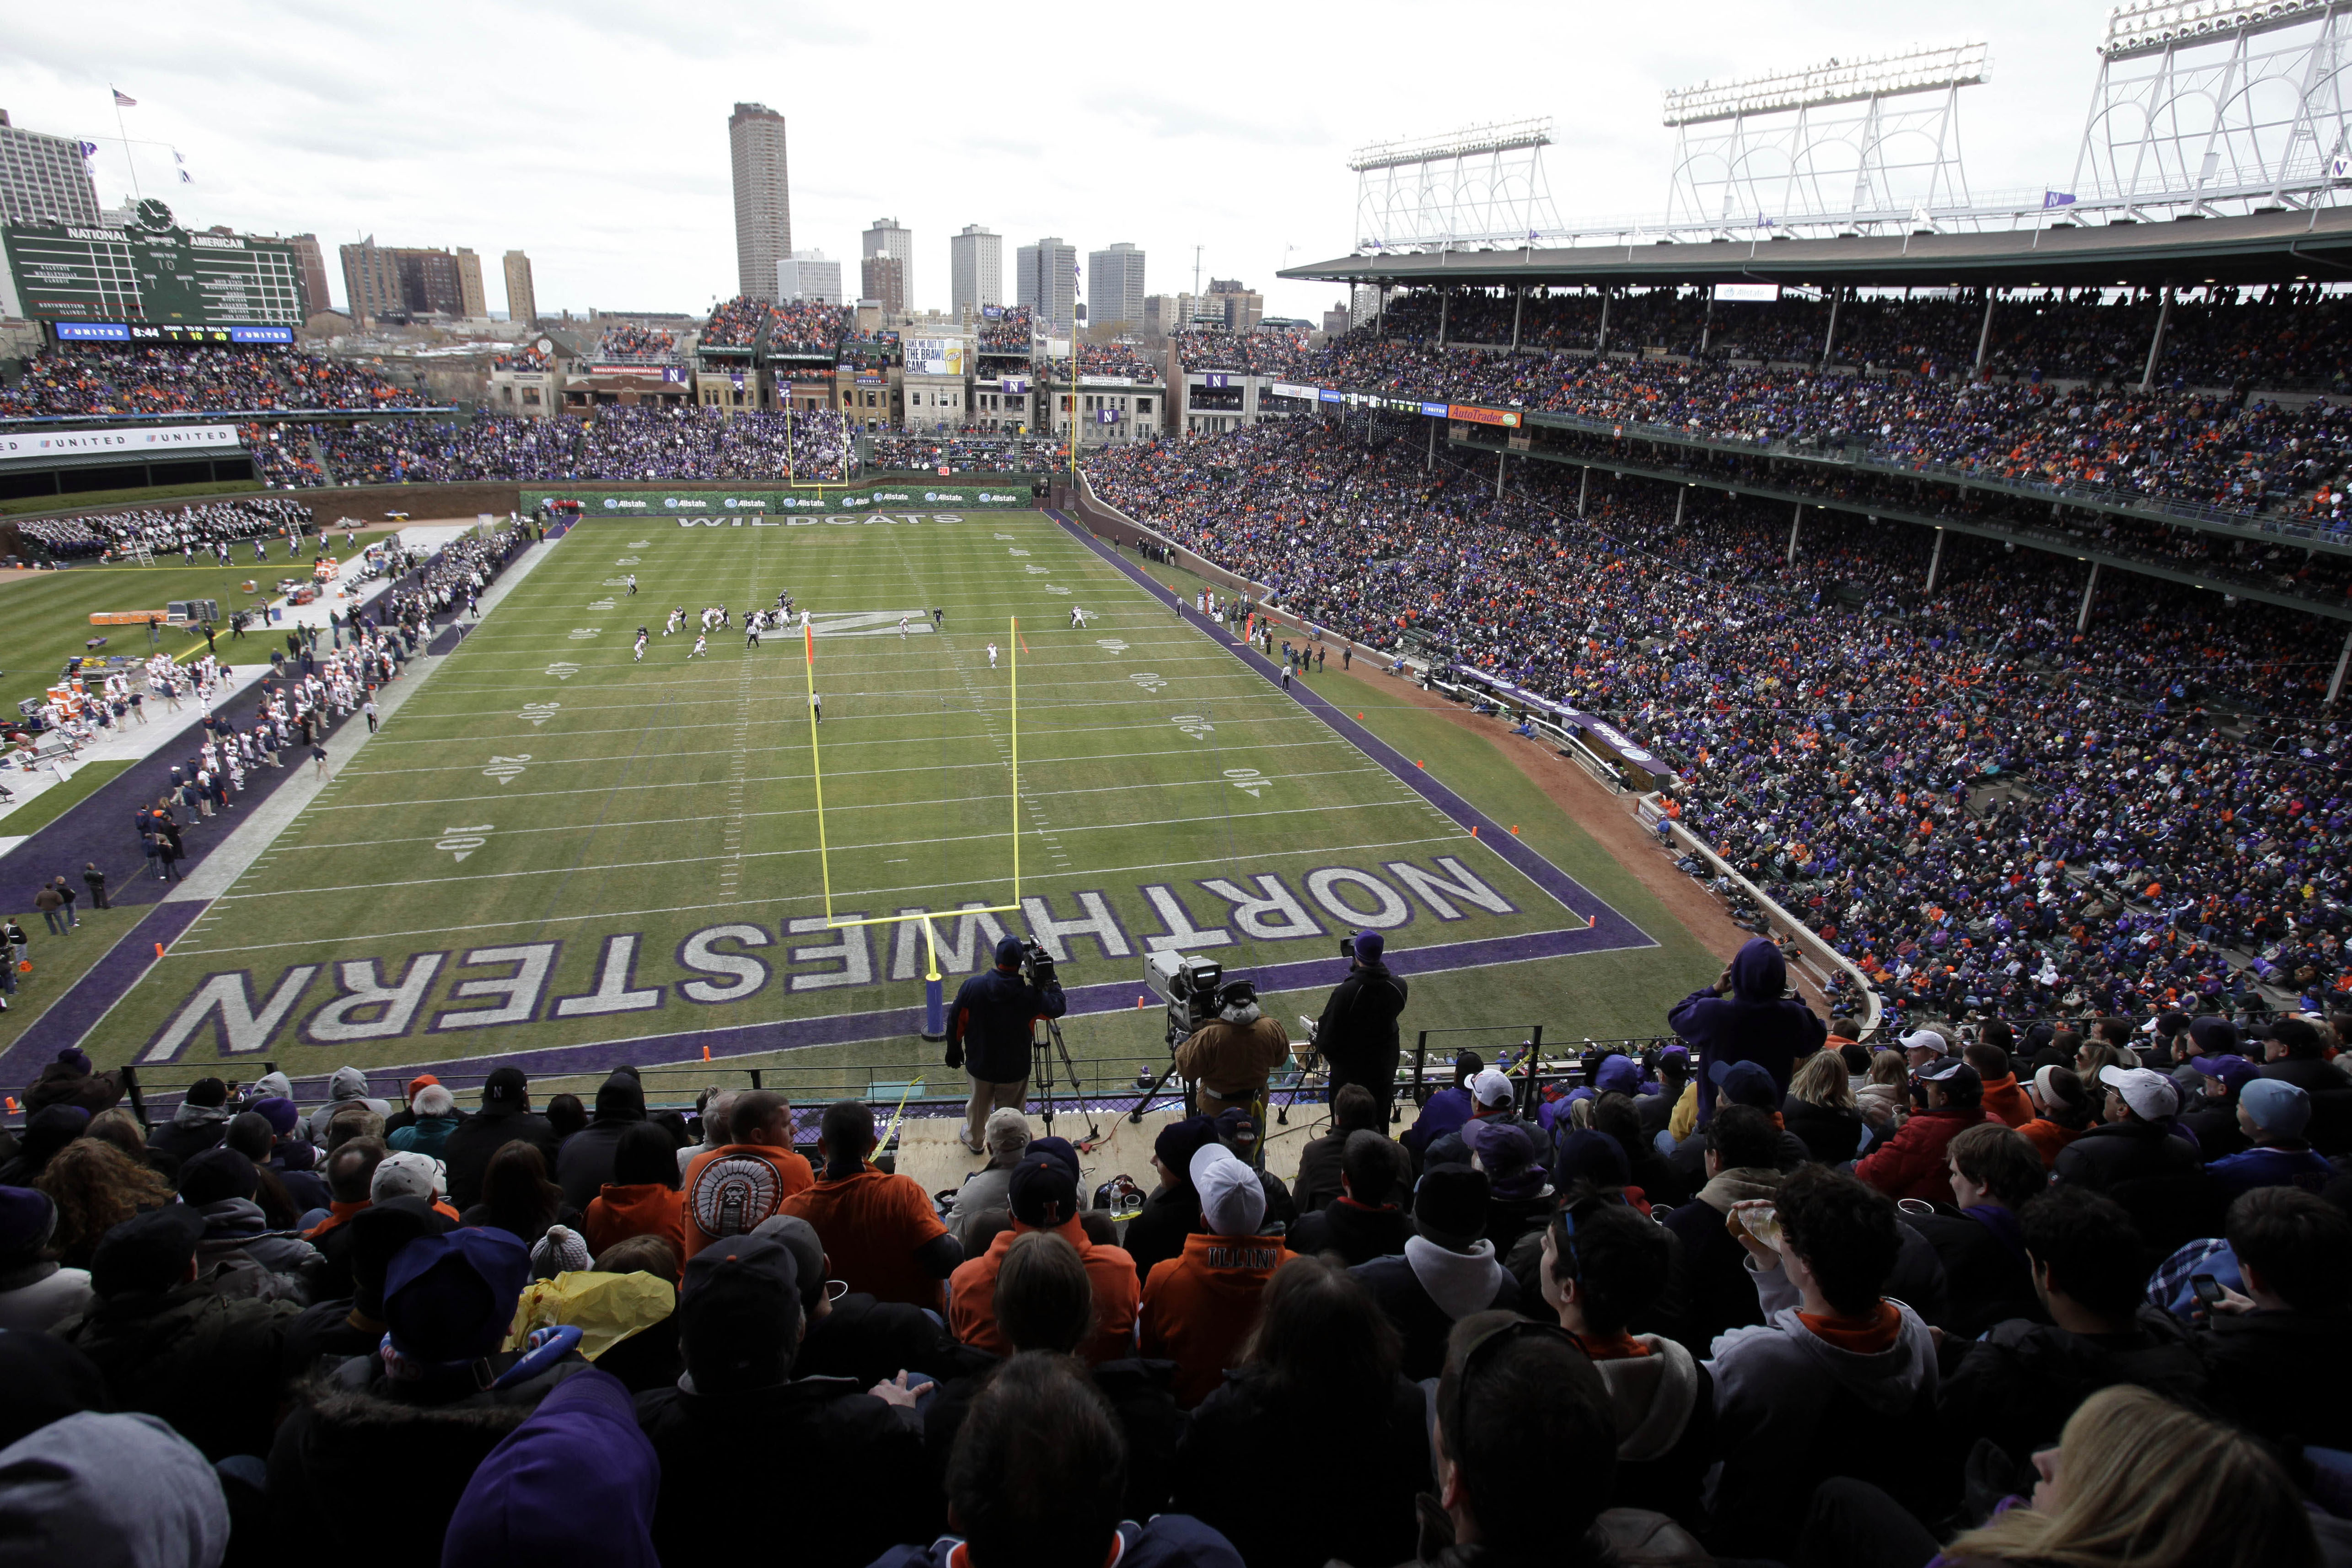 Wrigley Field will host two Northwestern football games this season. 